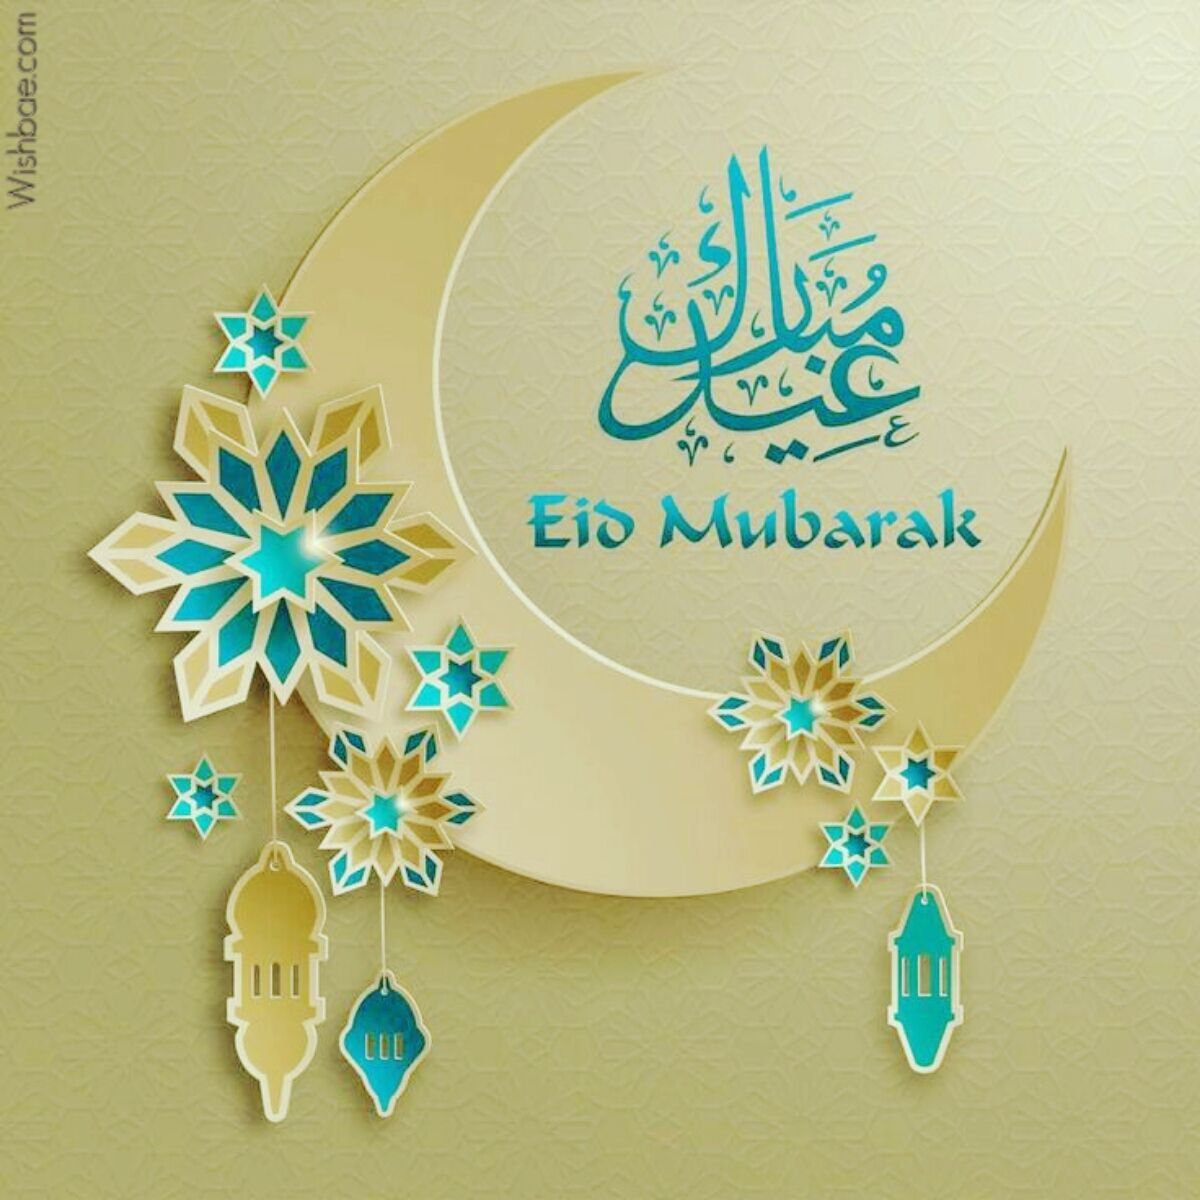 Eid Mubarak Wishes, Happy Eid Al Fitr Quotes, Messages & Image